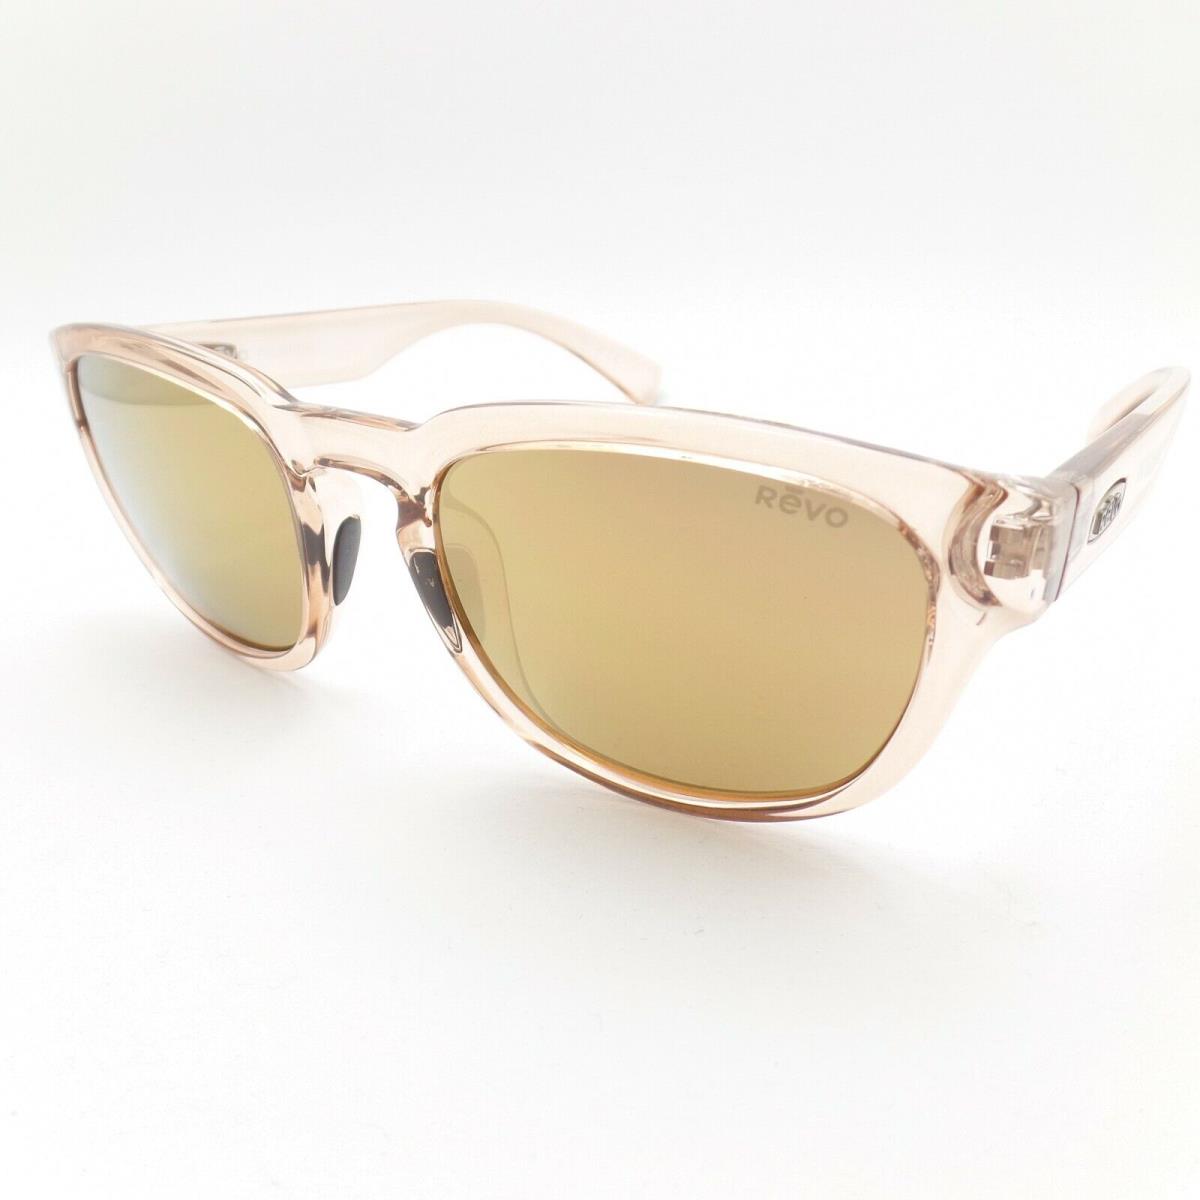 Revo sunglasses  - Crystal Sand Frame, Champagne Lens